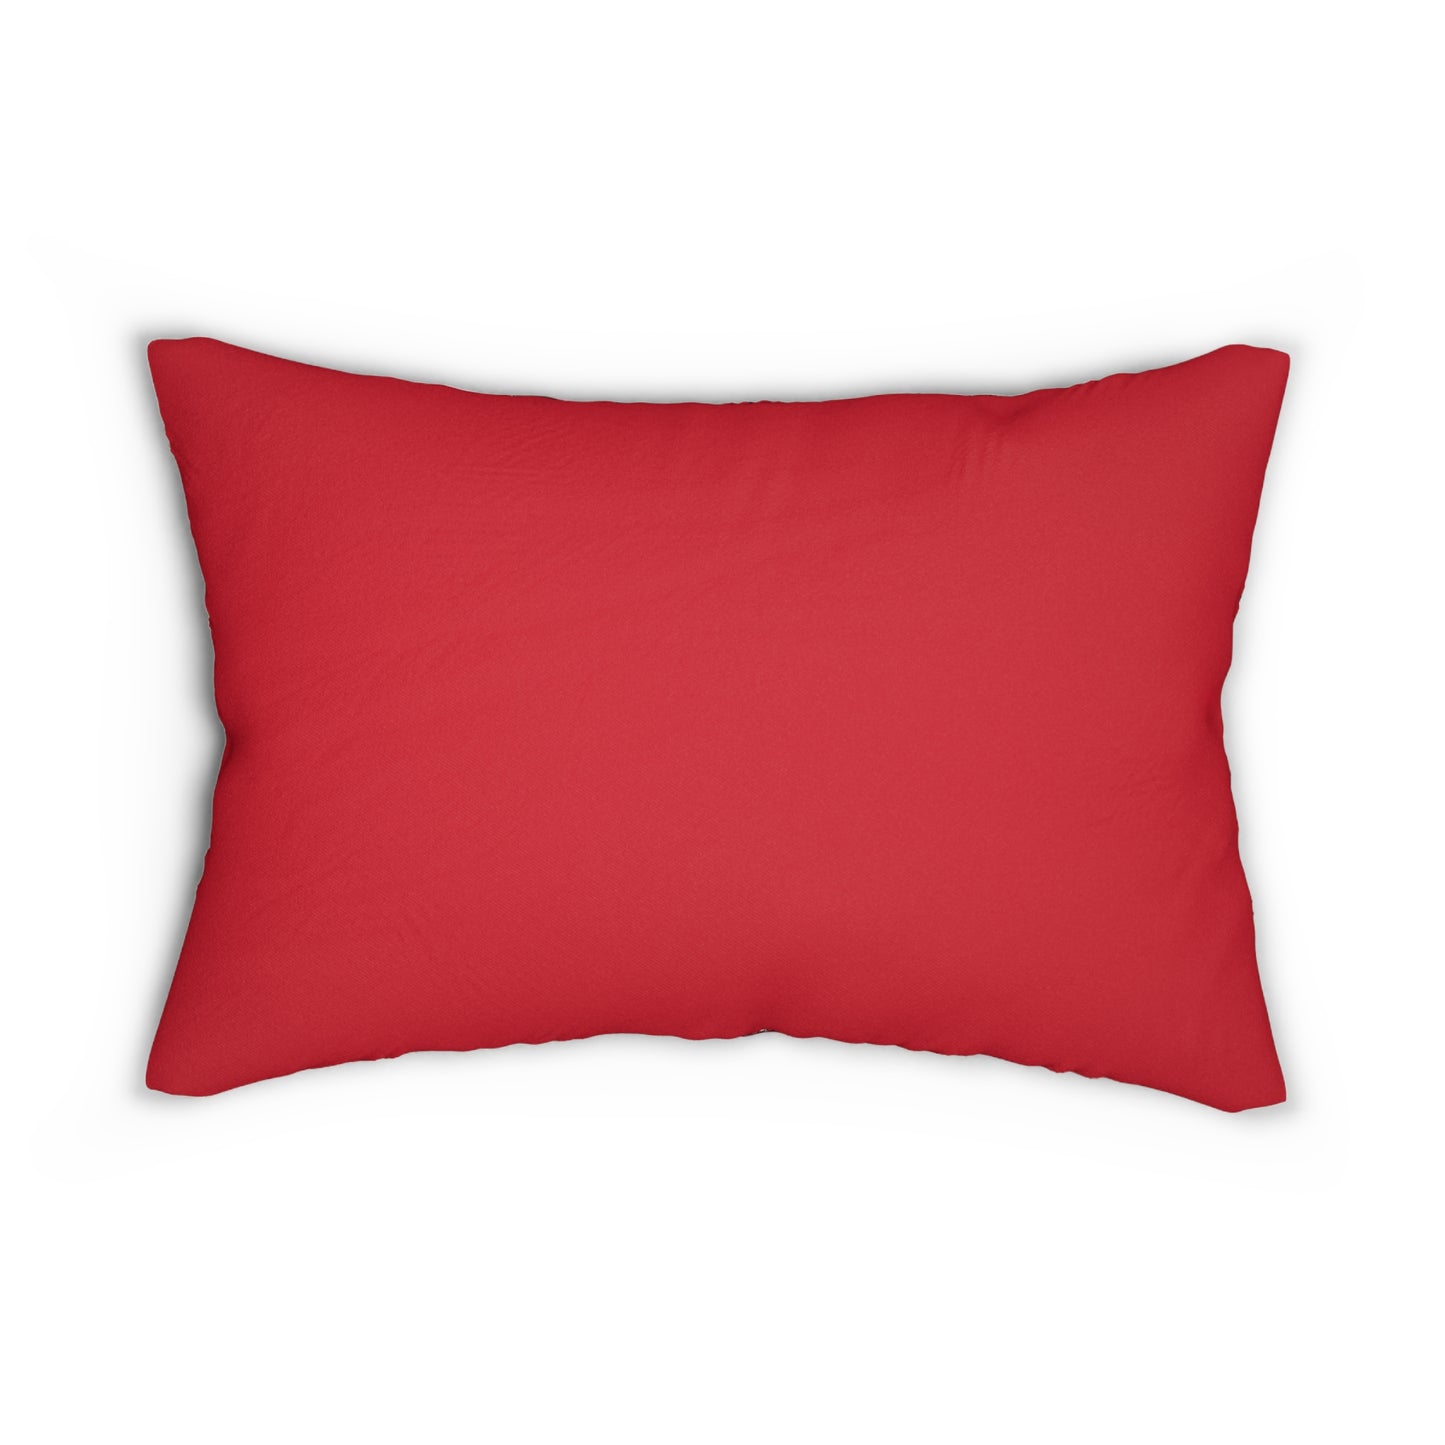 Santa Christmas Lumbar Pillow, Buffalo Plaid Pillow Cover, Cute Plaid Couch Pillow